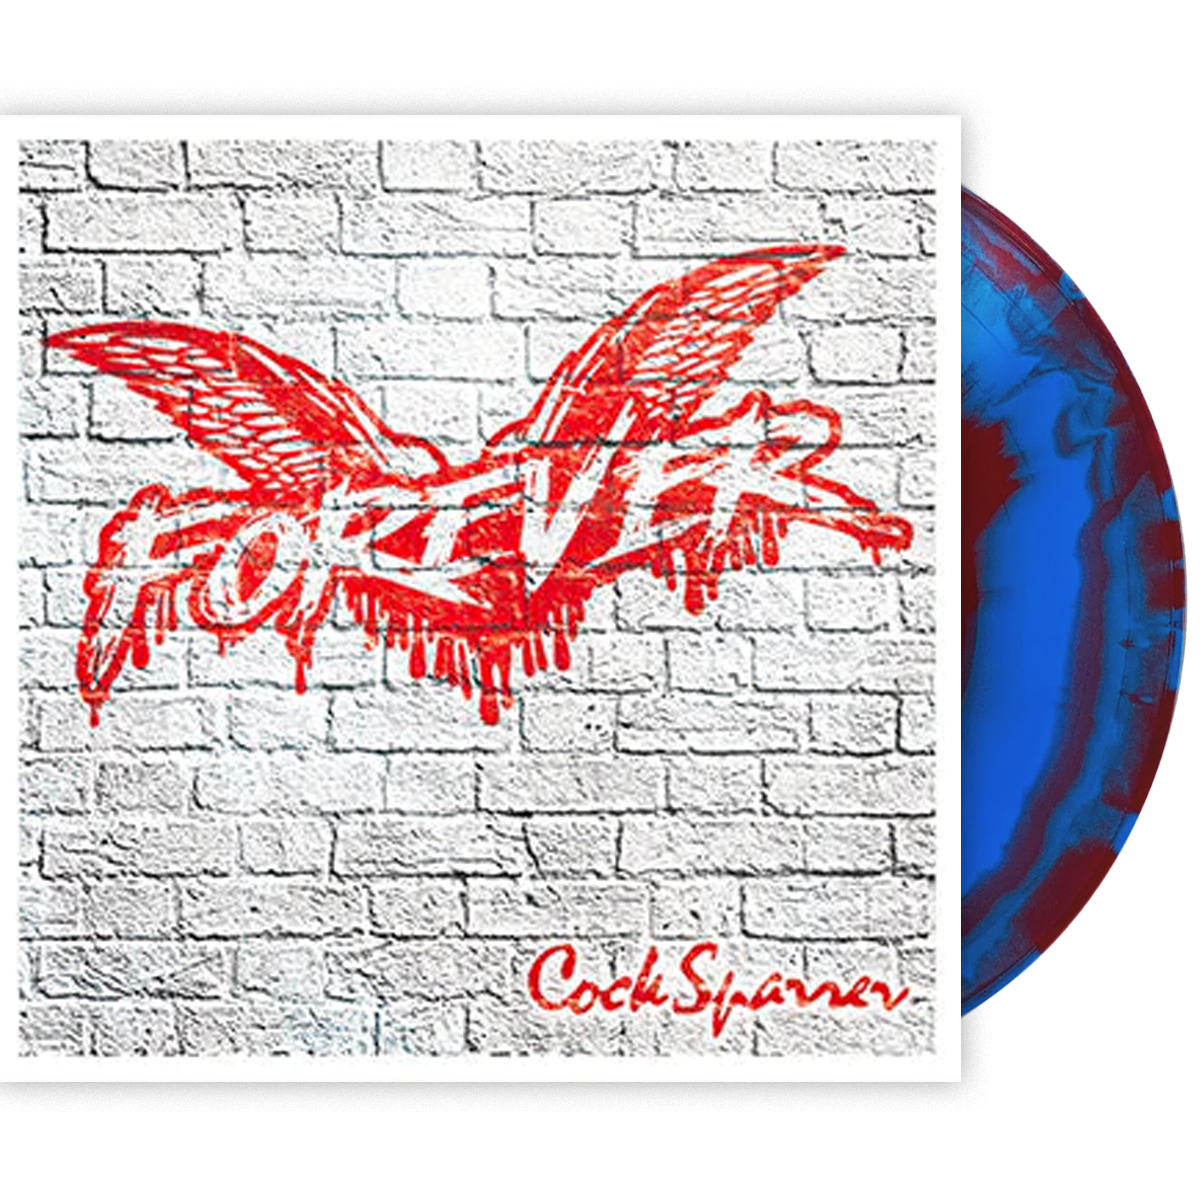 Cock Sparrer - Forever LP Deluxe (Claret and Blue Vinyl)